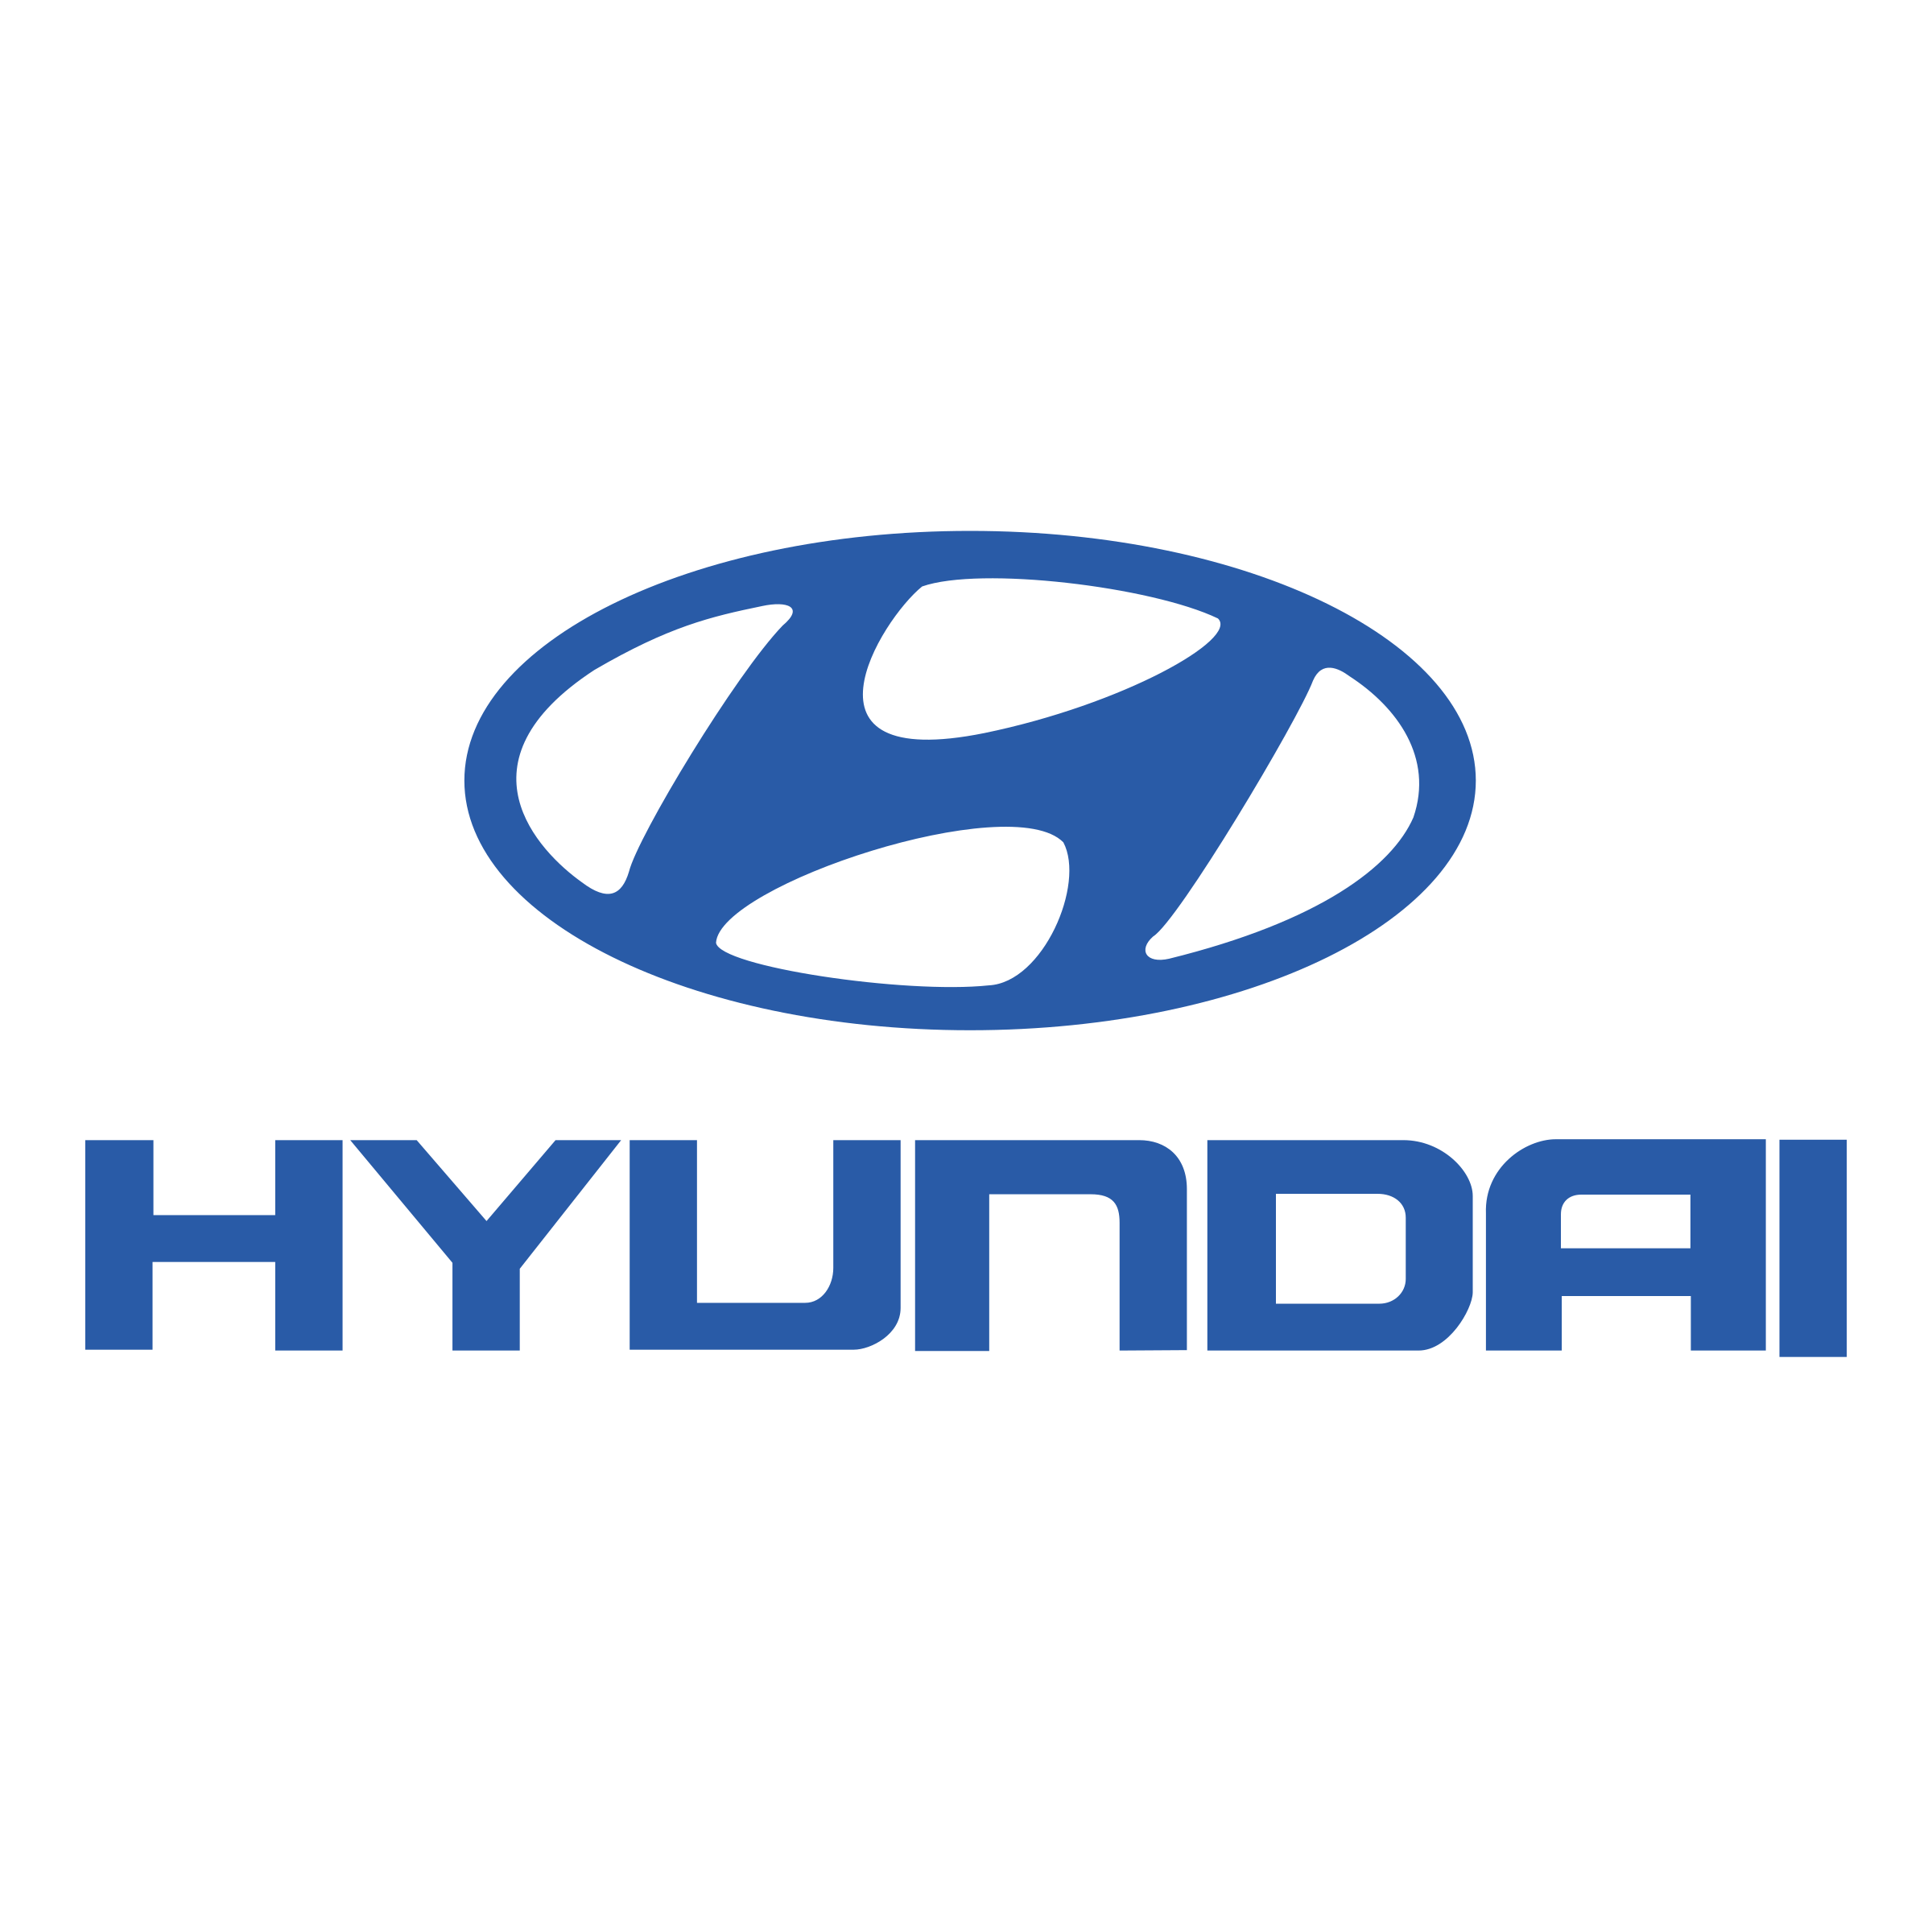 hyundai motor company logo png transparent #32505